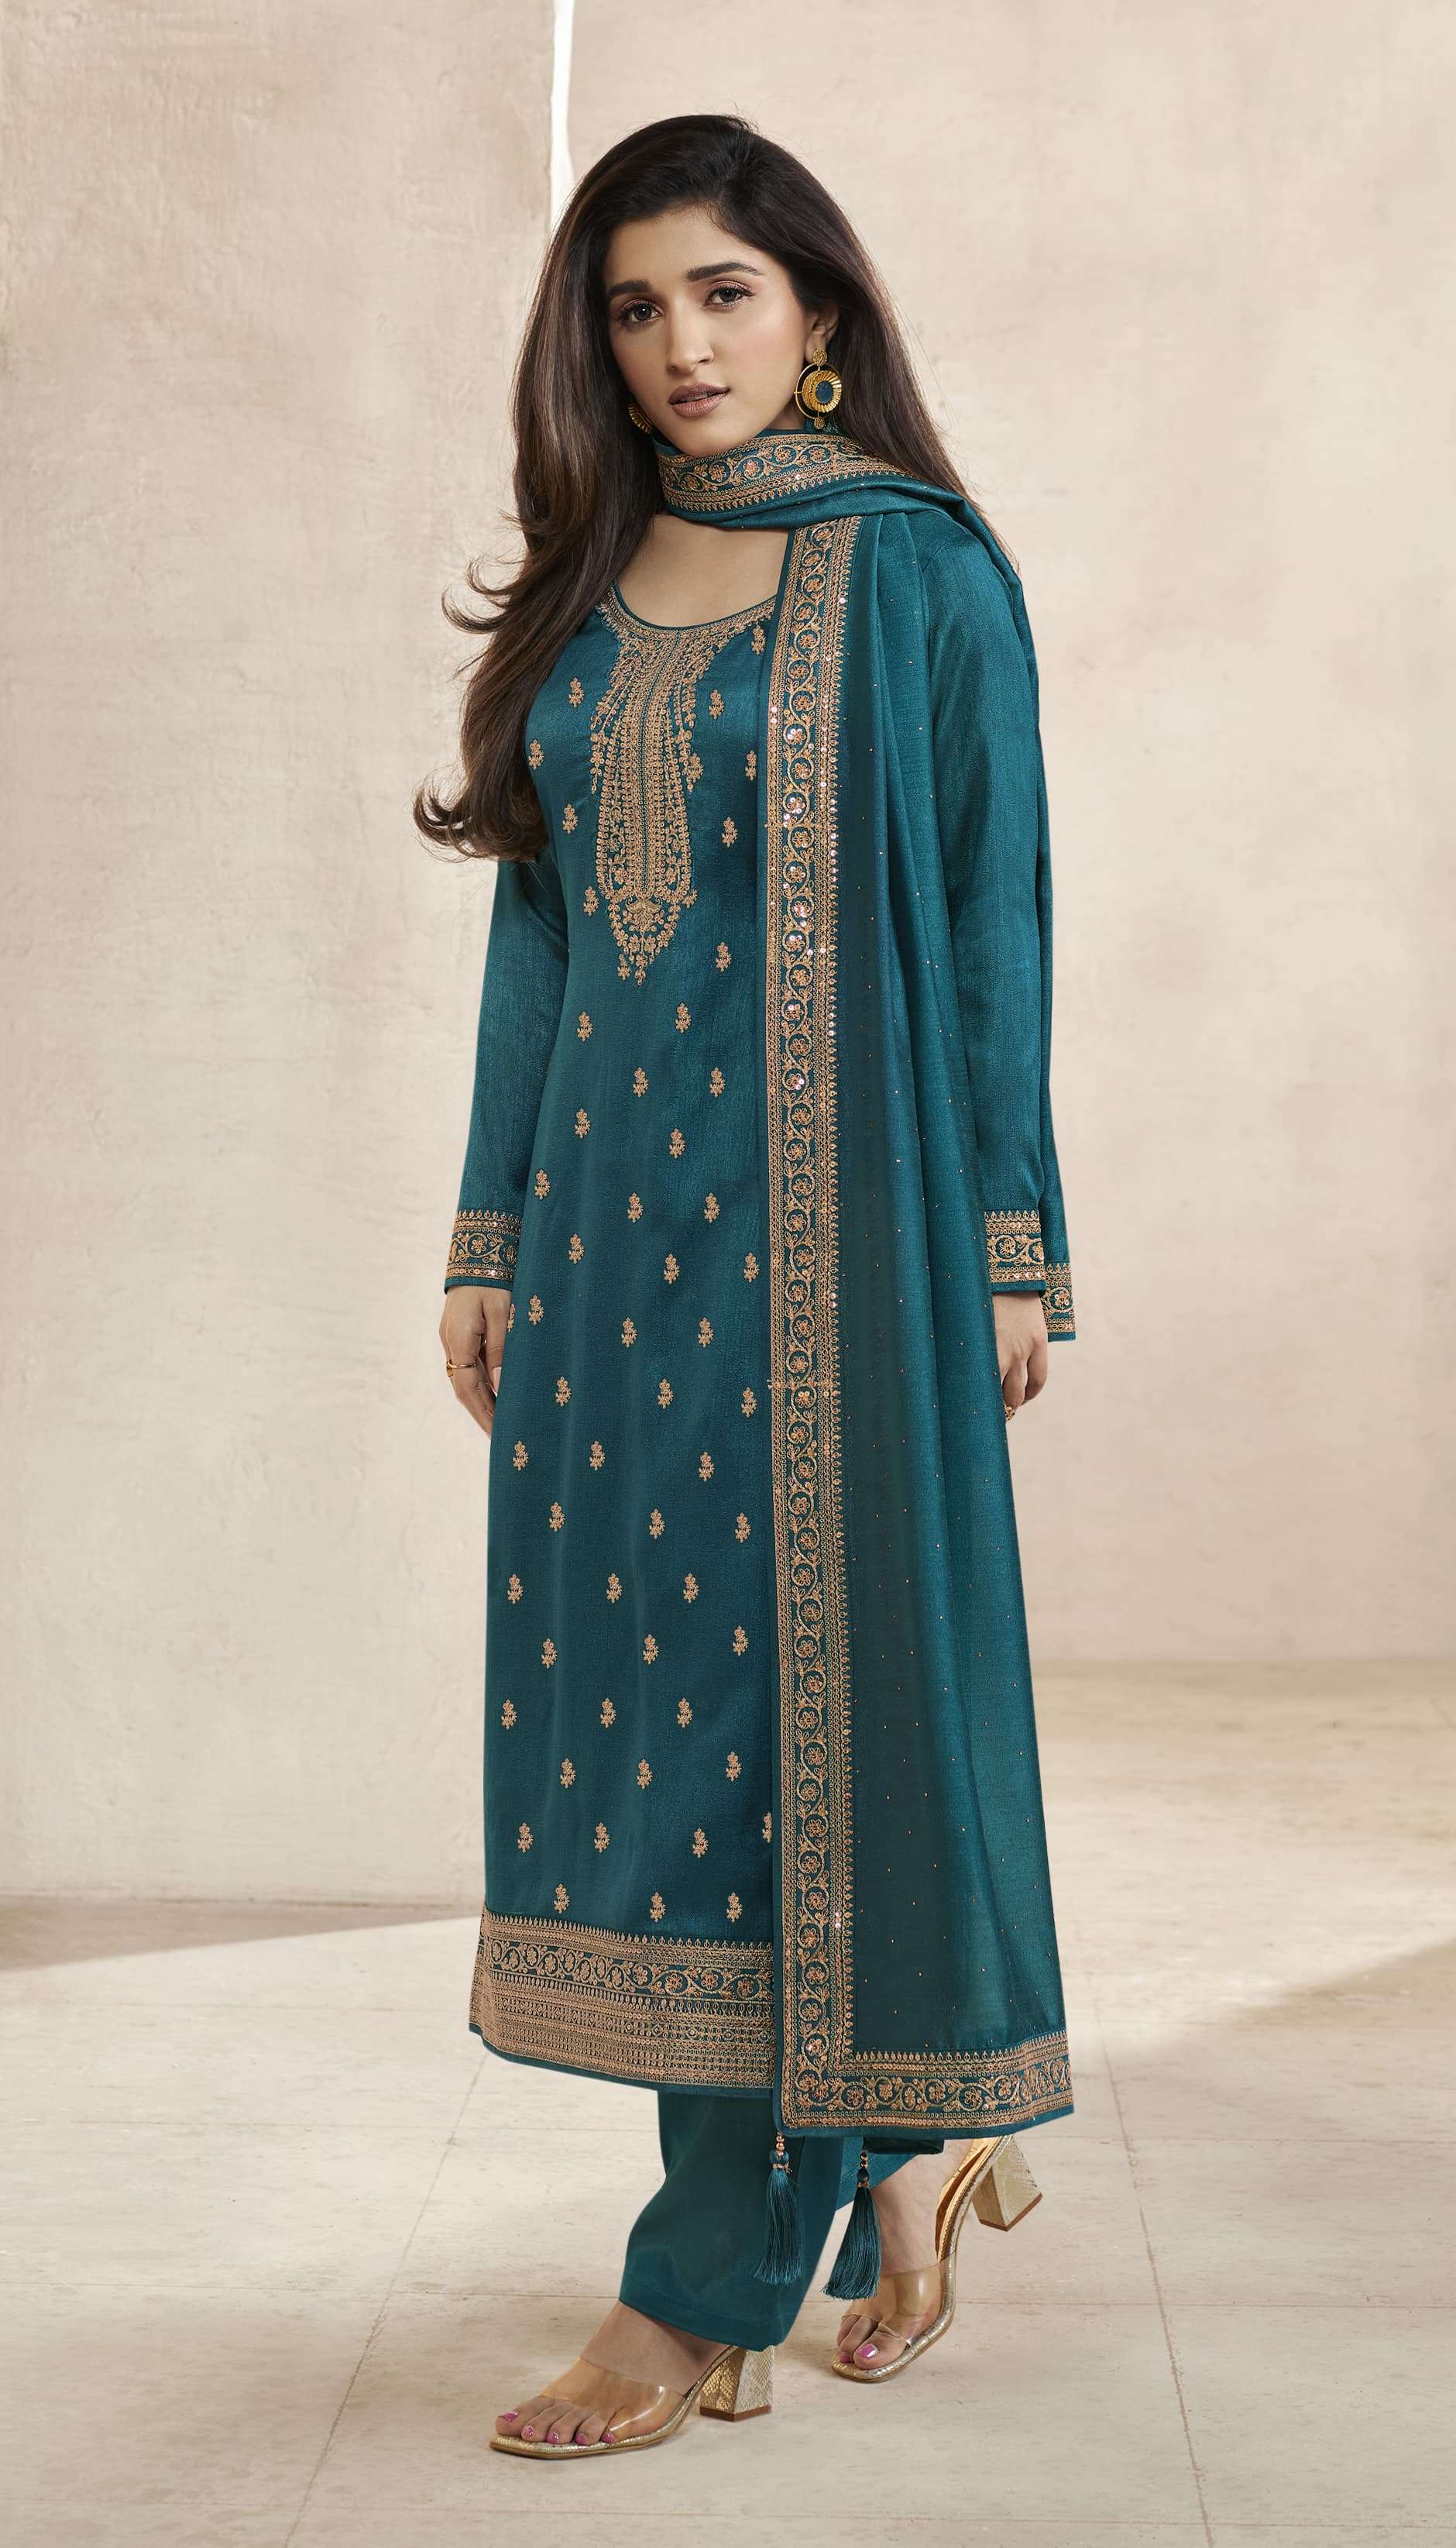 vinay fashion aachal 64591-64595 series latest pakistani salwar kameez wholesaler surat gujarat